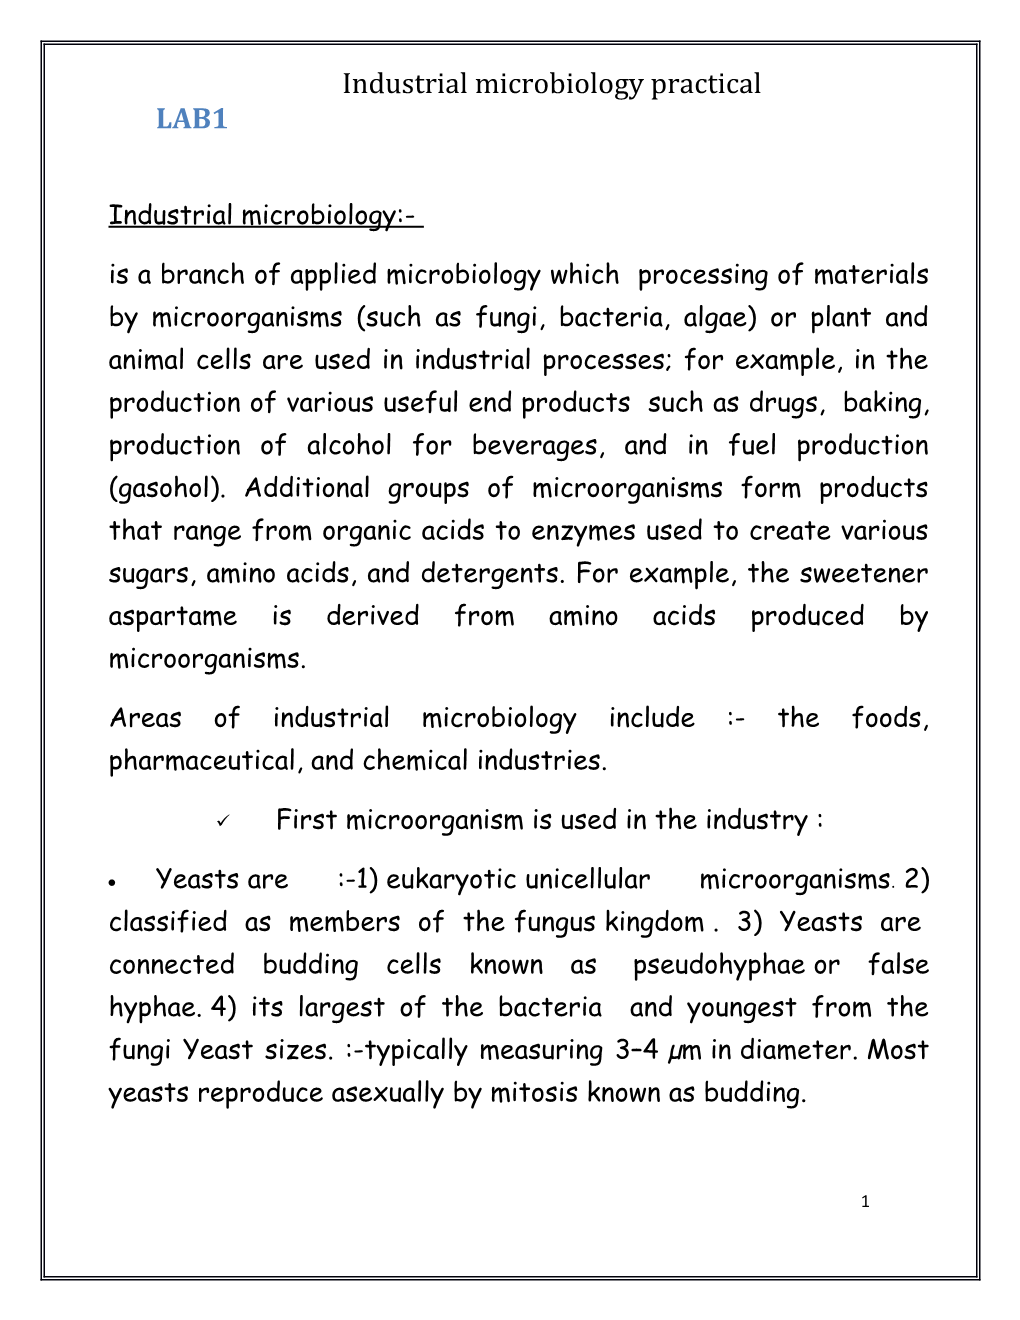 Industrial Microbiology Practical